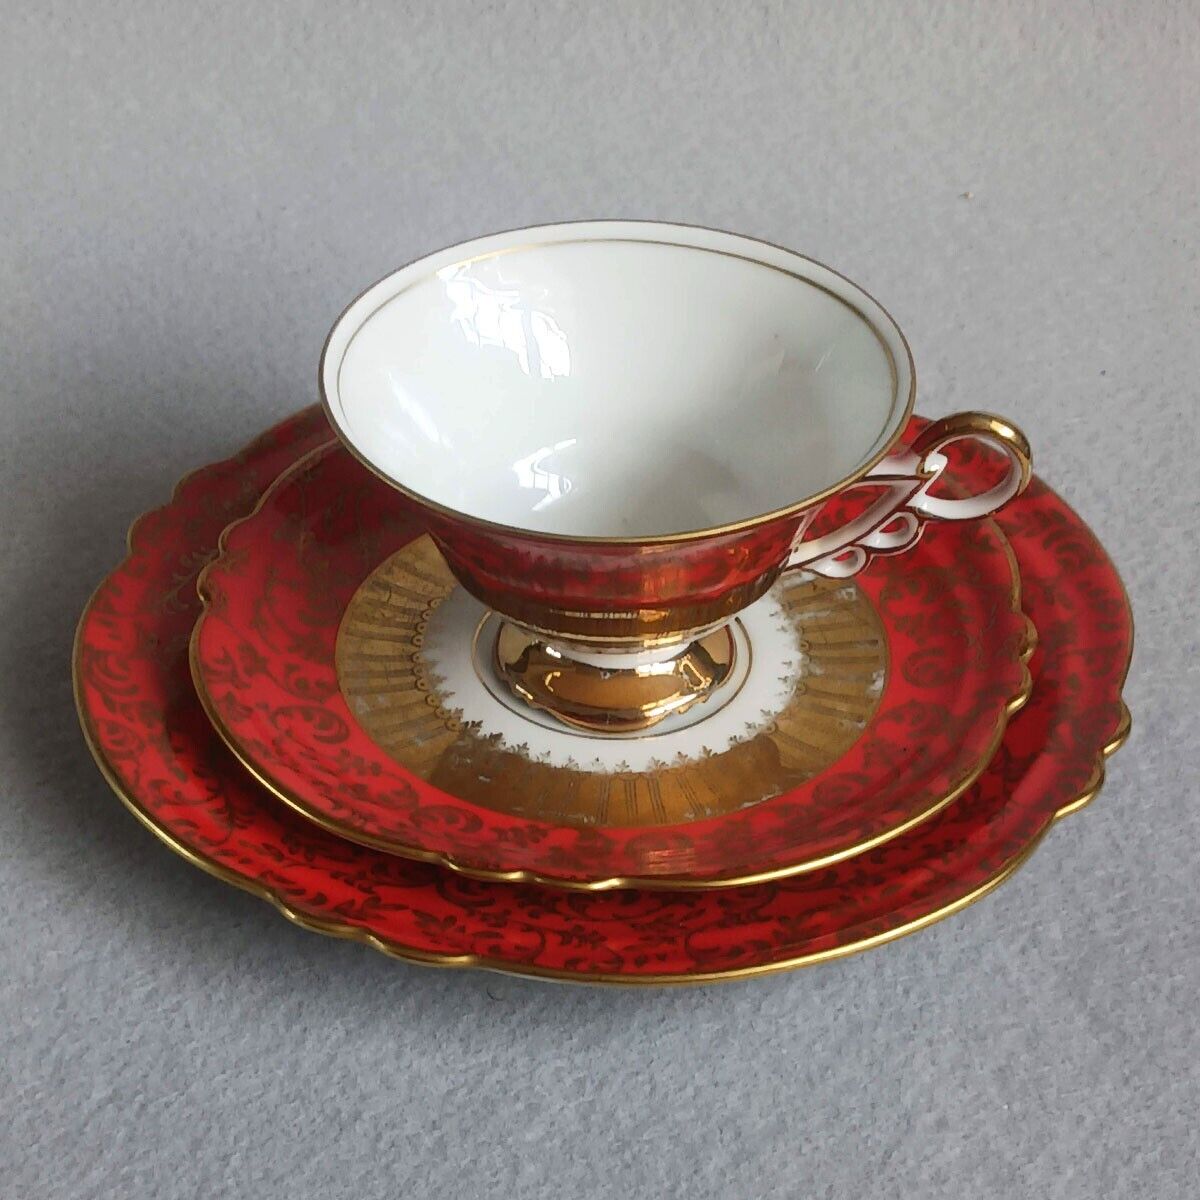 Vintage Jlmenau Tea Cup, Saucer, Dessert Plate Trio, Red & Gold, Made in German